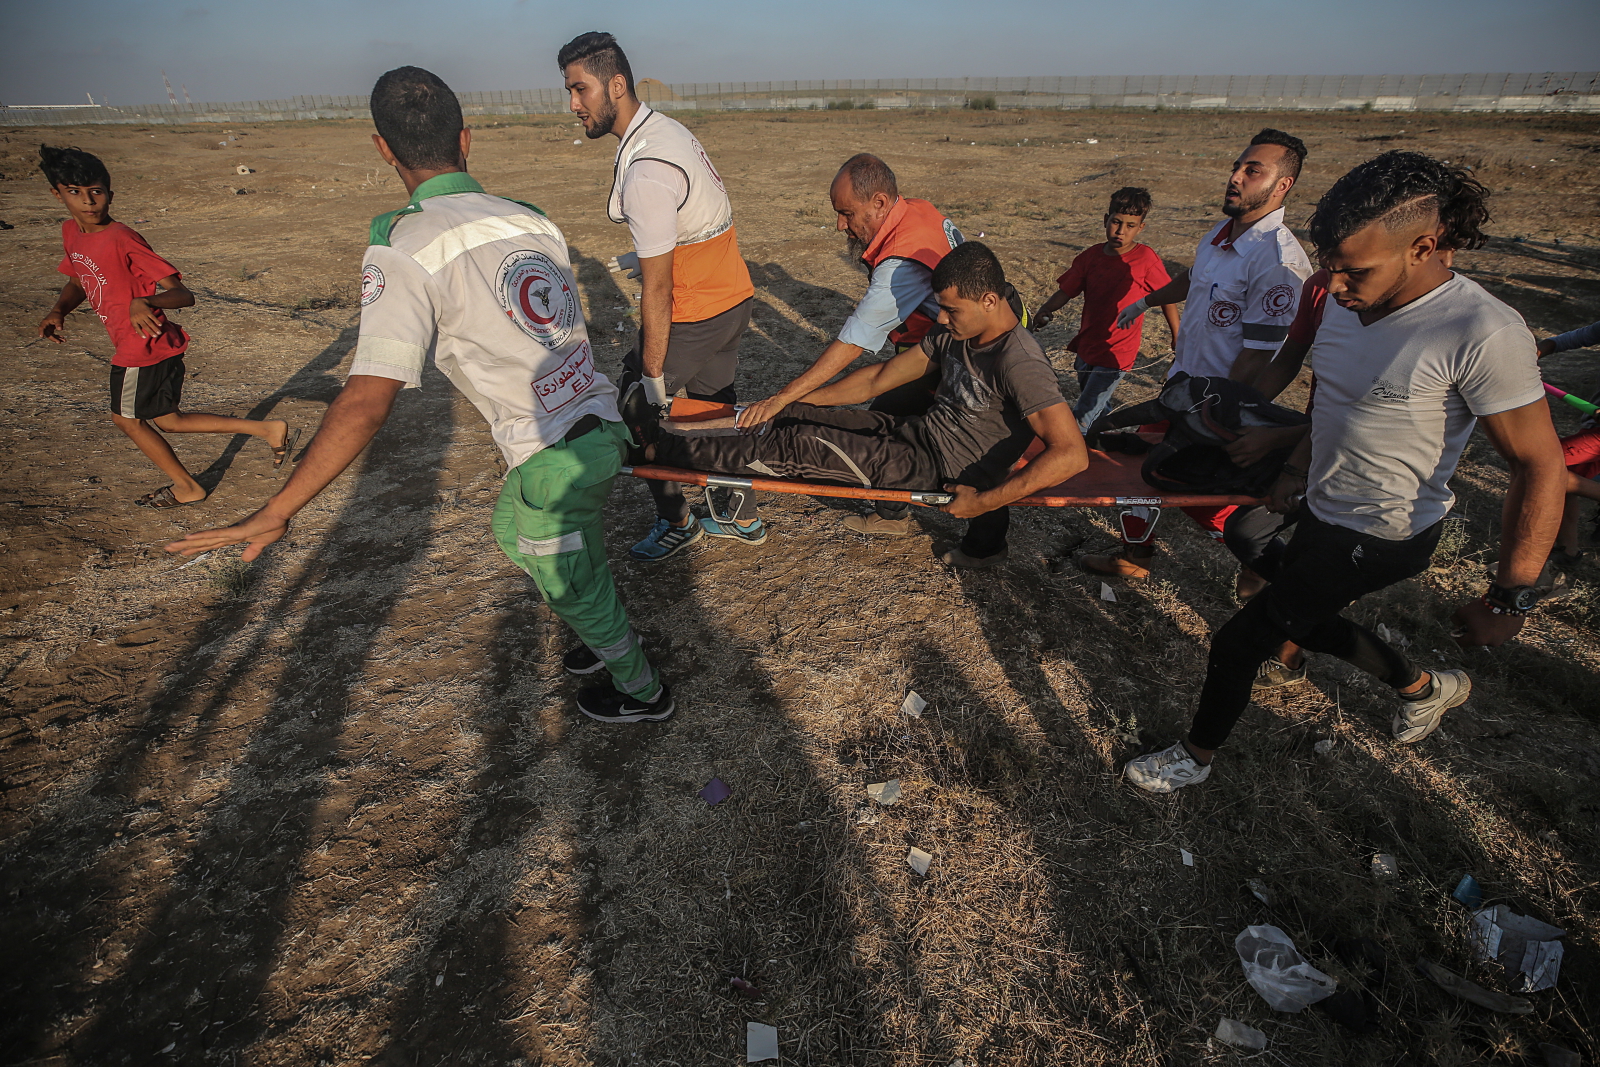 Konflikt Izraelsko Palestyński w Strefie Gazy EPA/MOHAMMED SABER 